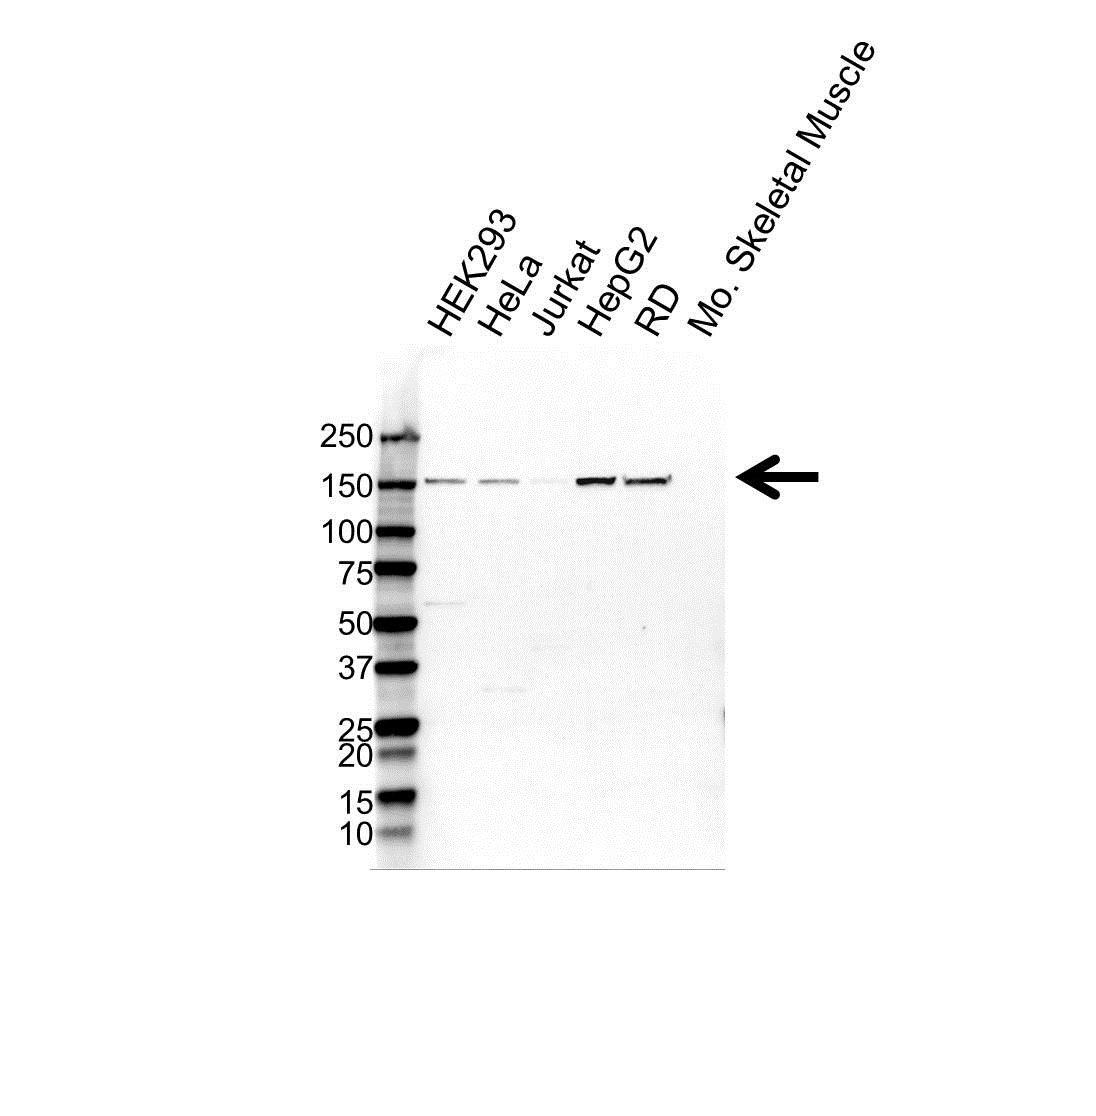 Anti Collagen IV Alpha 5 Antibody (PrecisionAb Polyclonal Antibody) gallery image 1